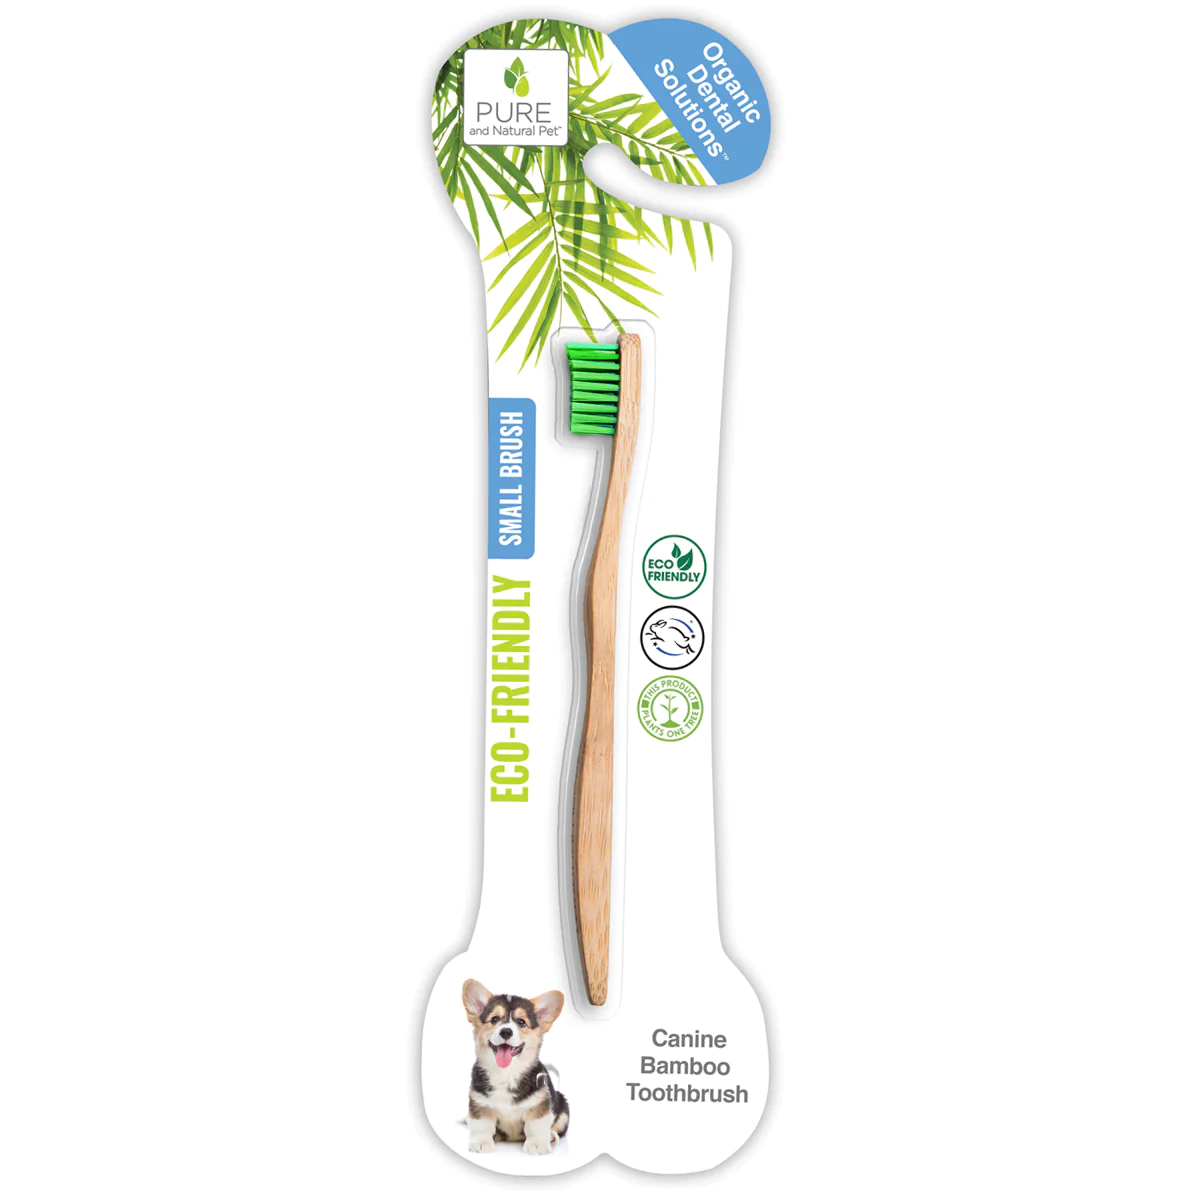 Pure & Natural Pet Bamboo Toothbrush